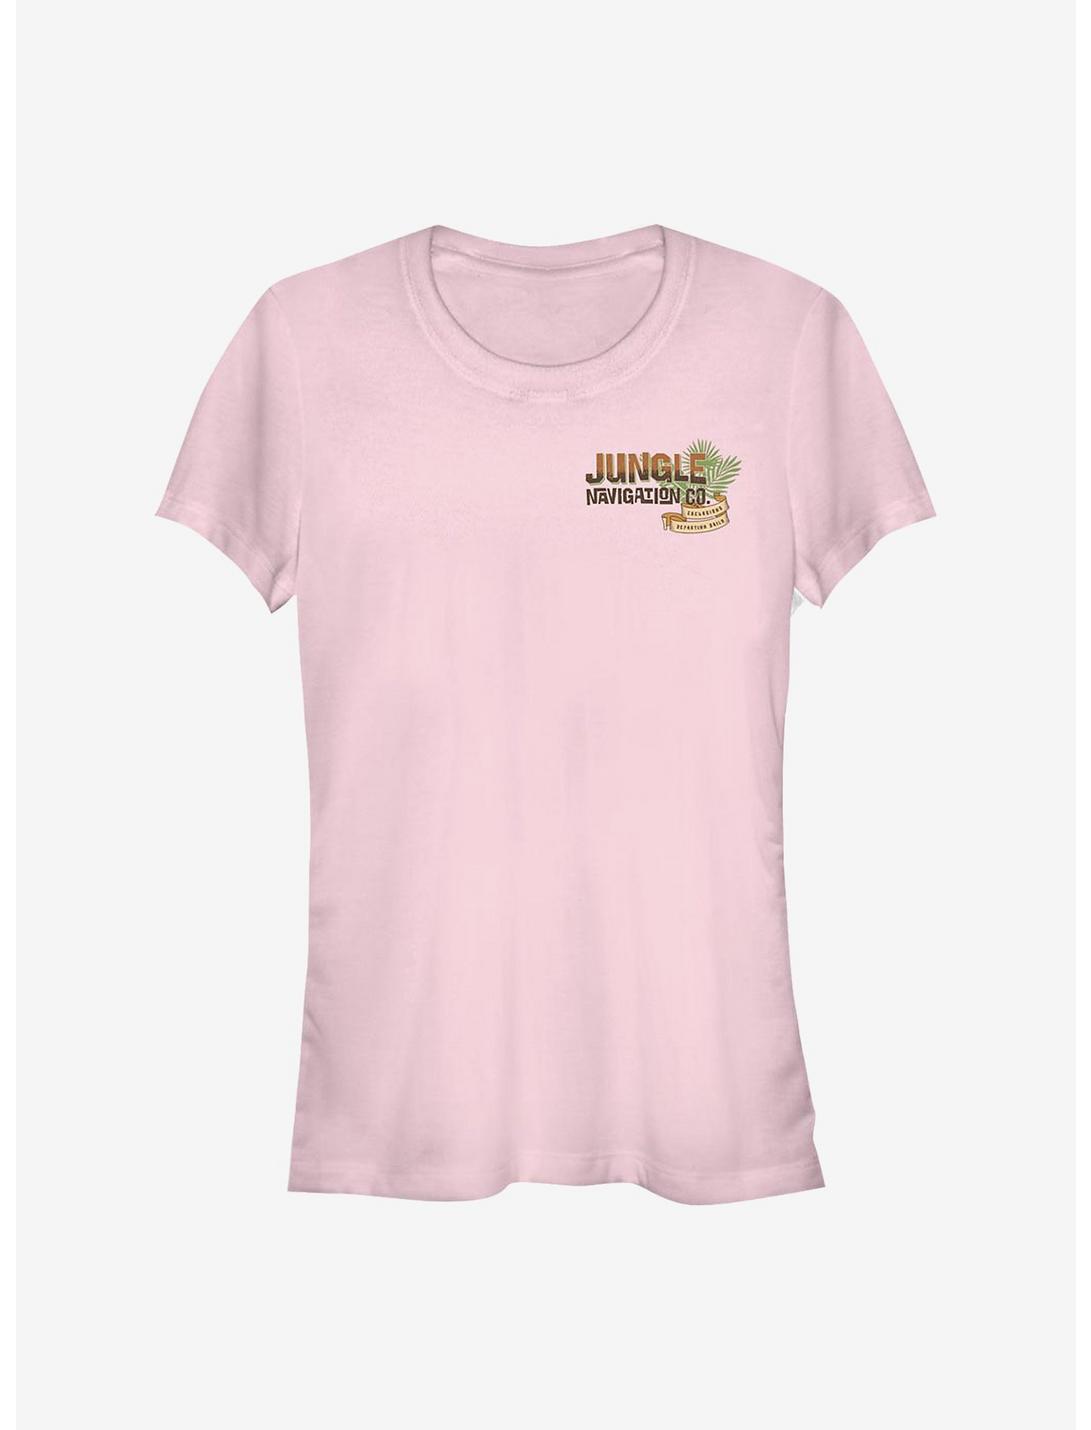 Disney Jungle Cruise Jungle Navigation Co. Girls T-Shirt, LIGHT PINK, hi-res